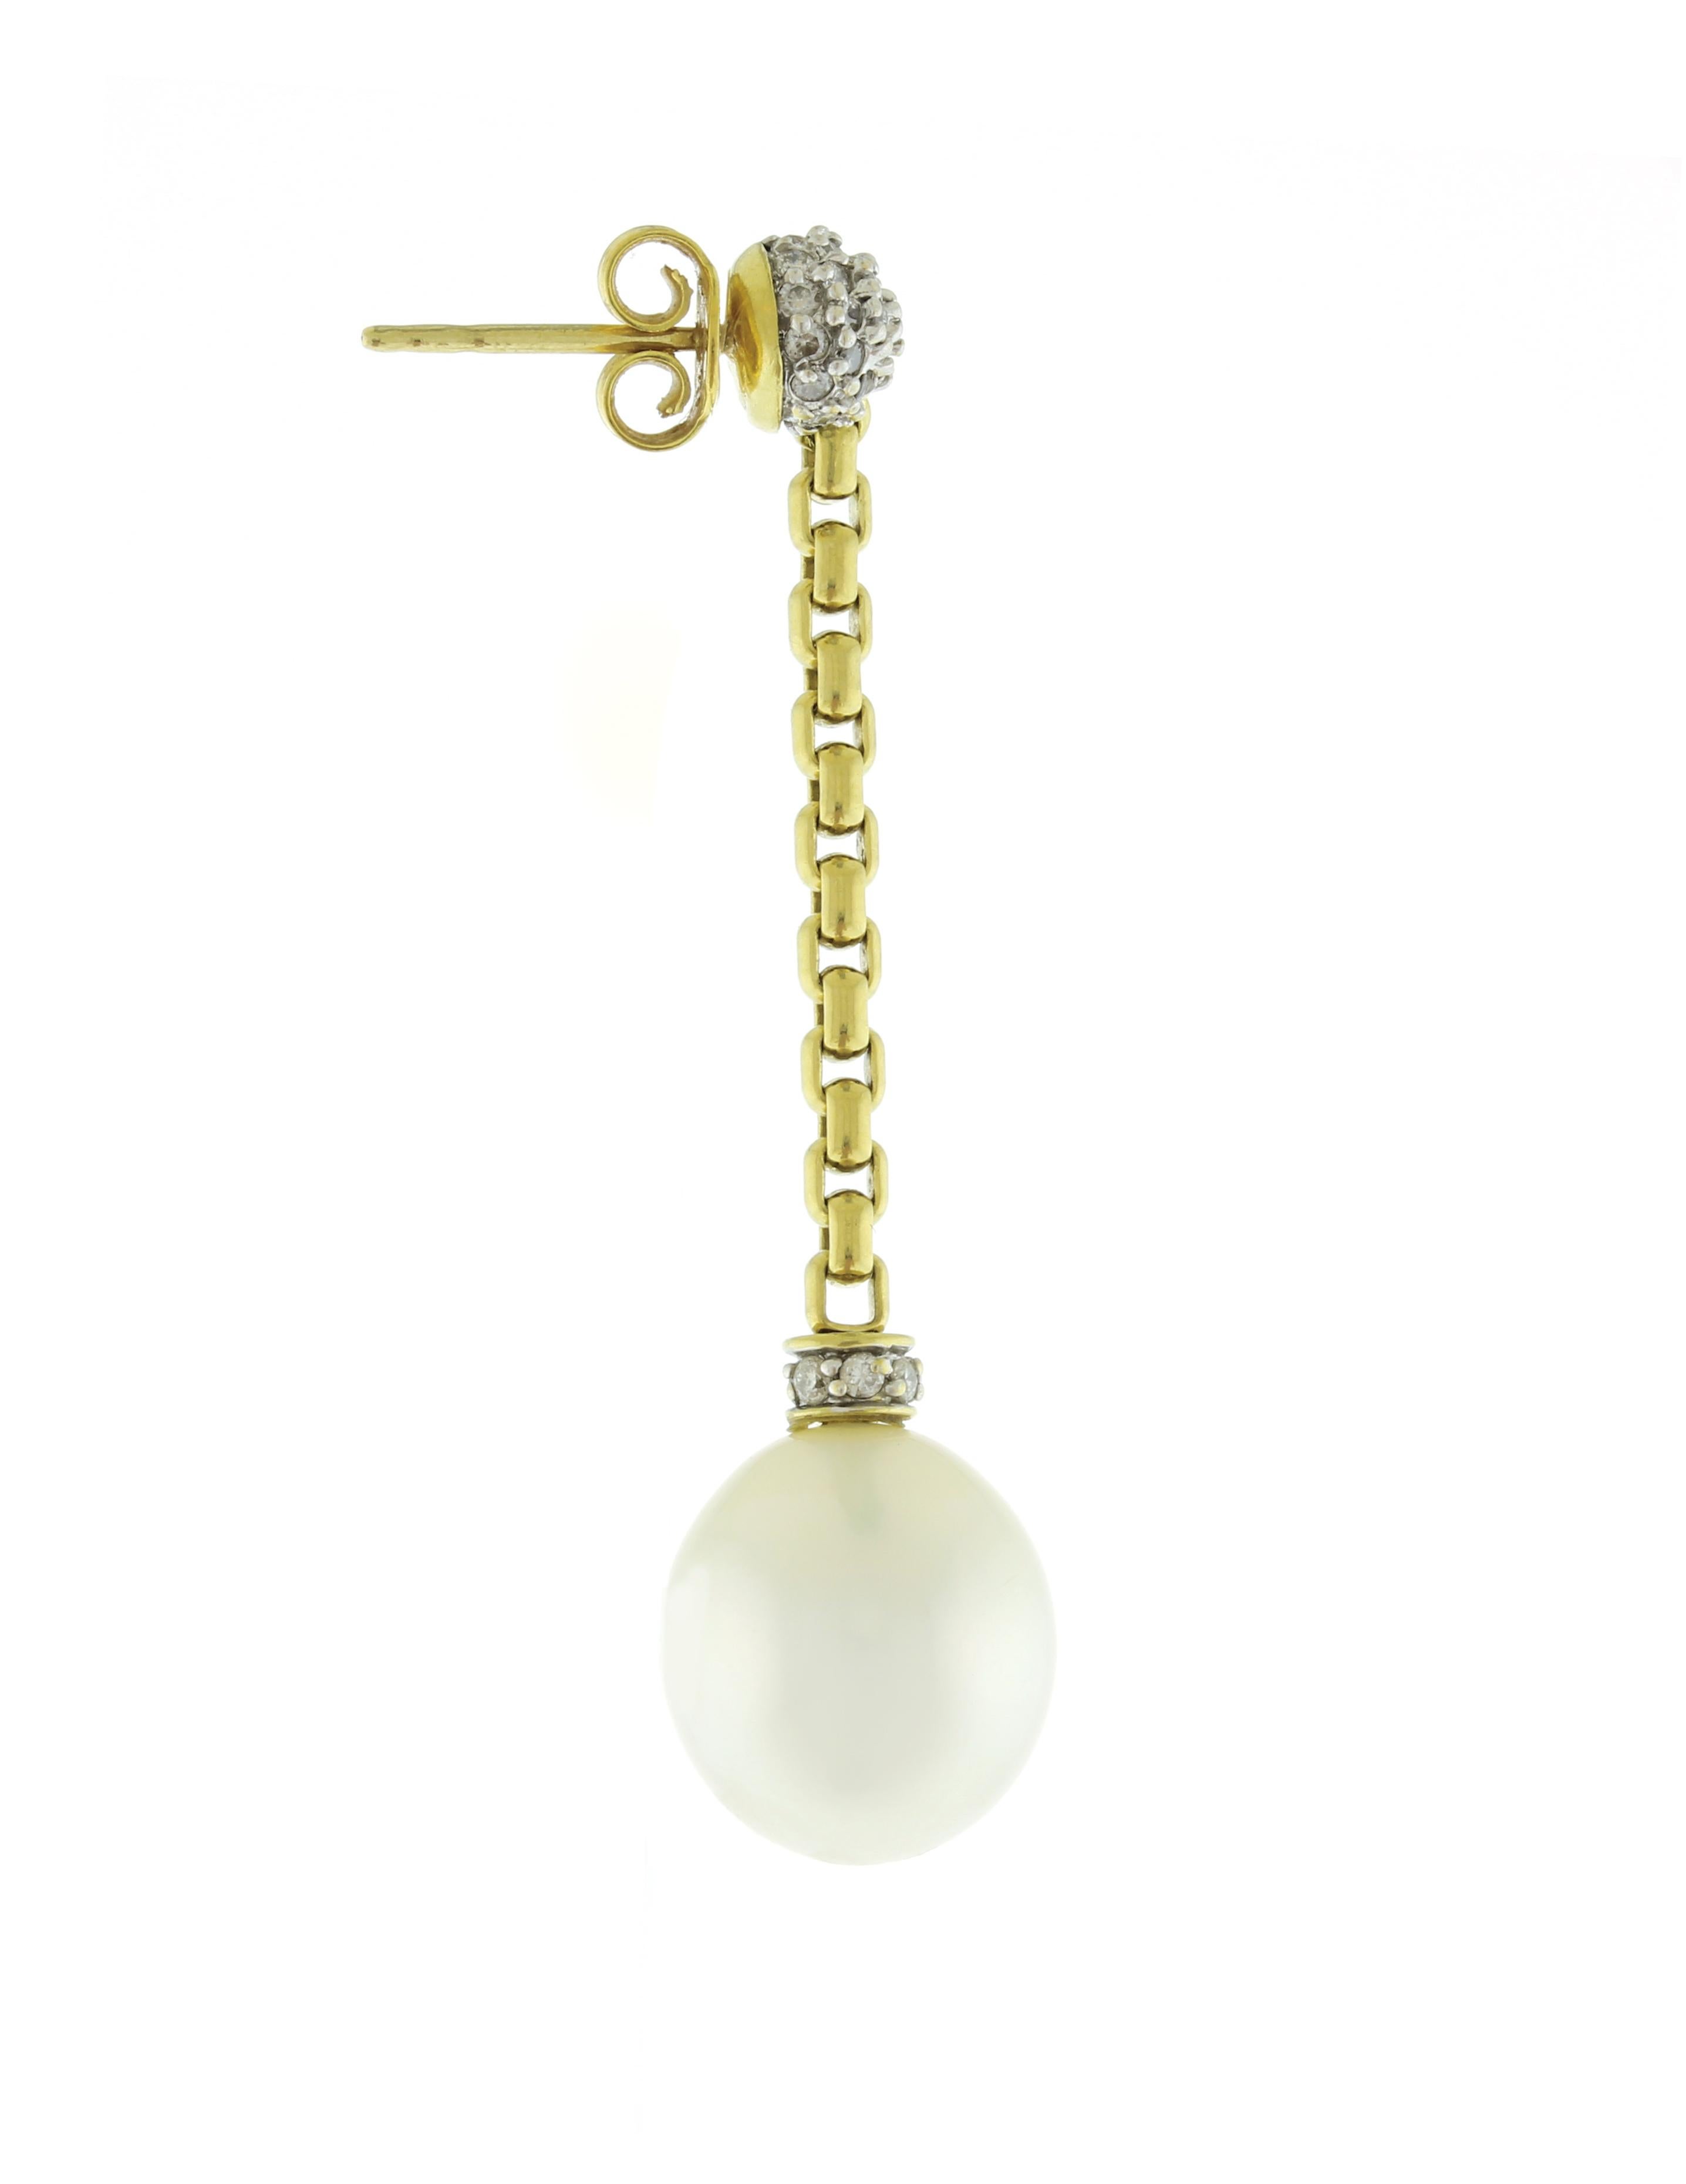 Brilliant Cut David Yurman Solari Chain Drop Earrings with Diamonds and Pearls For Sale